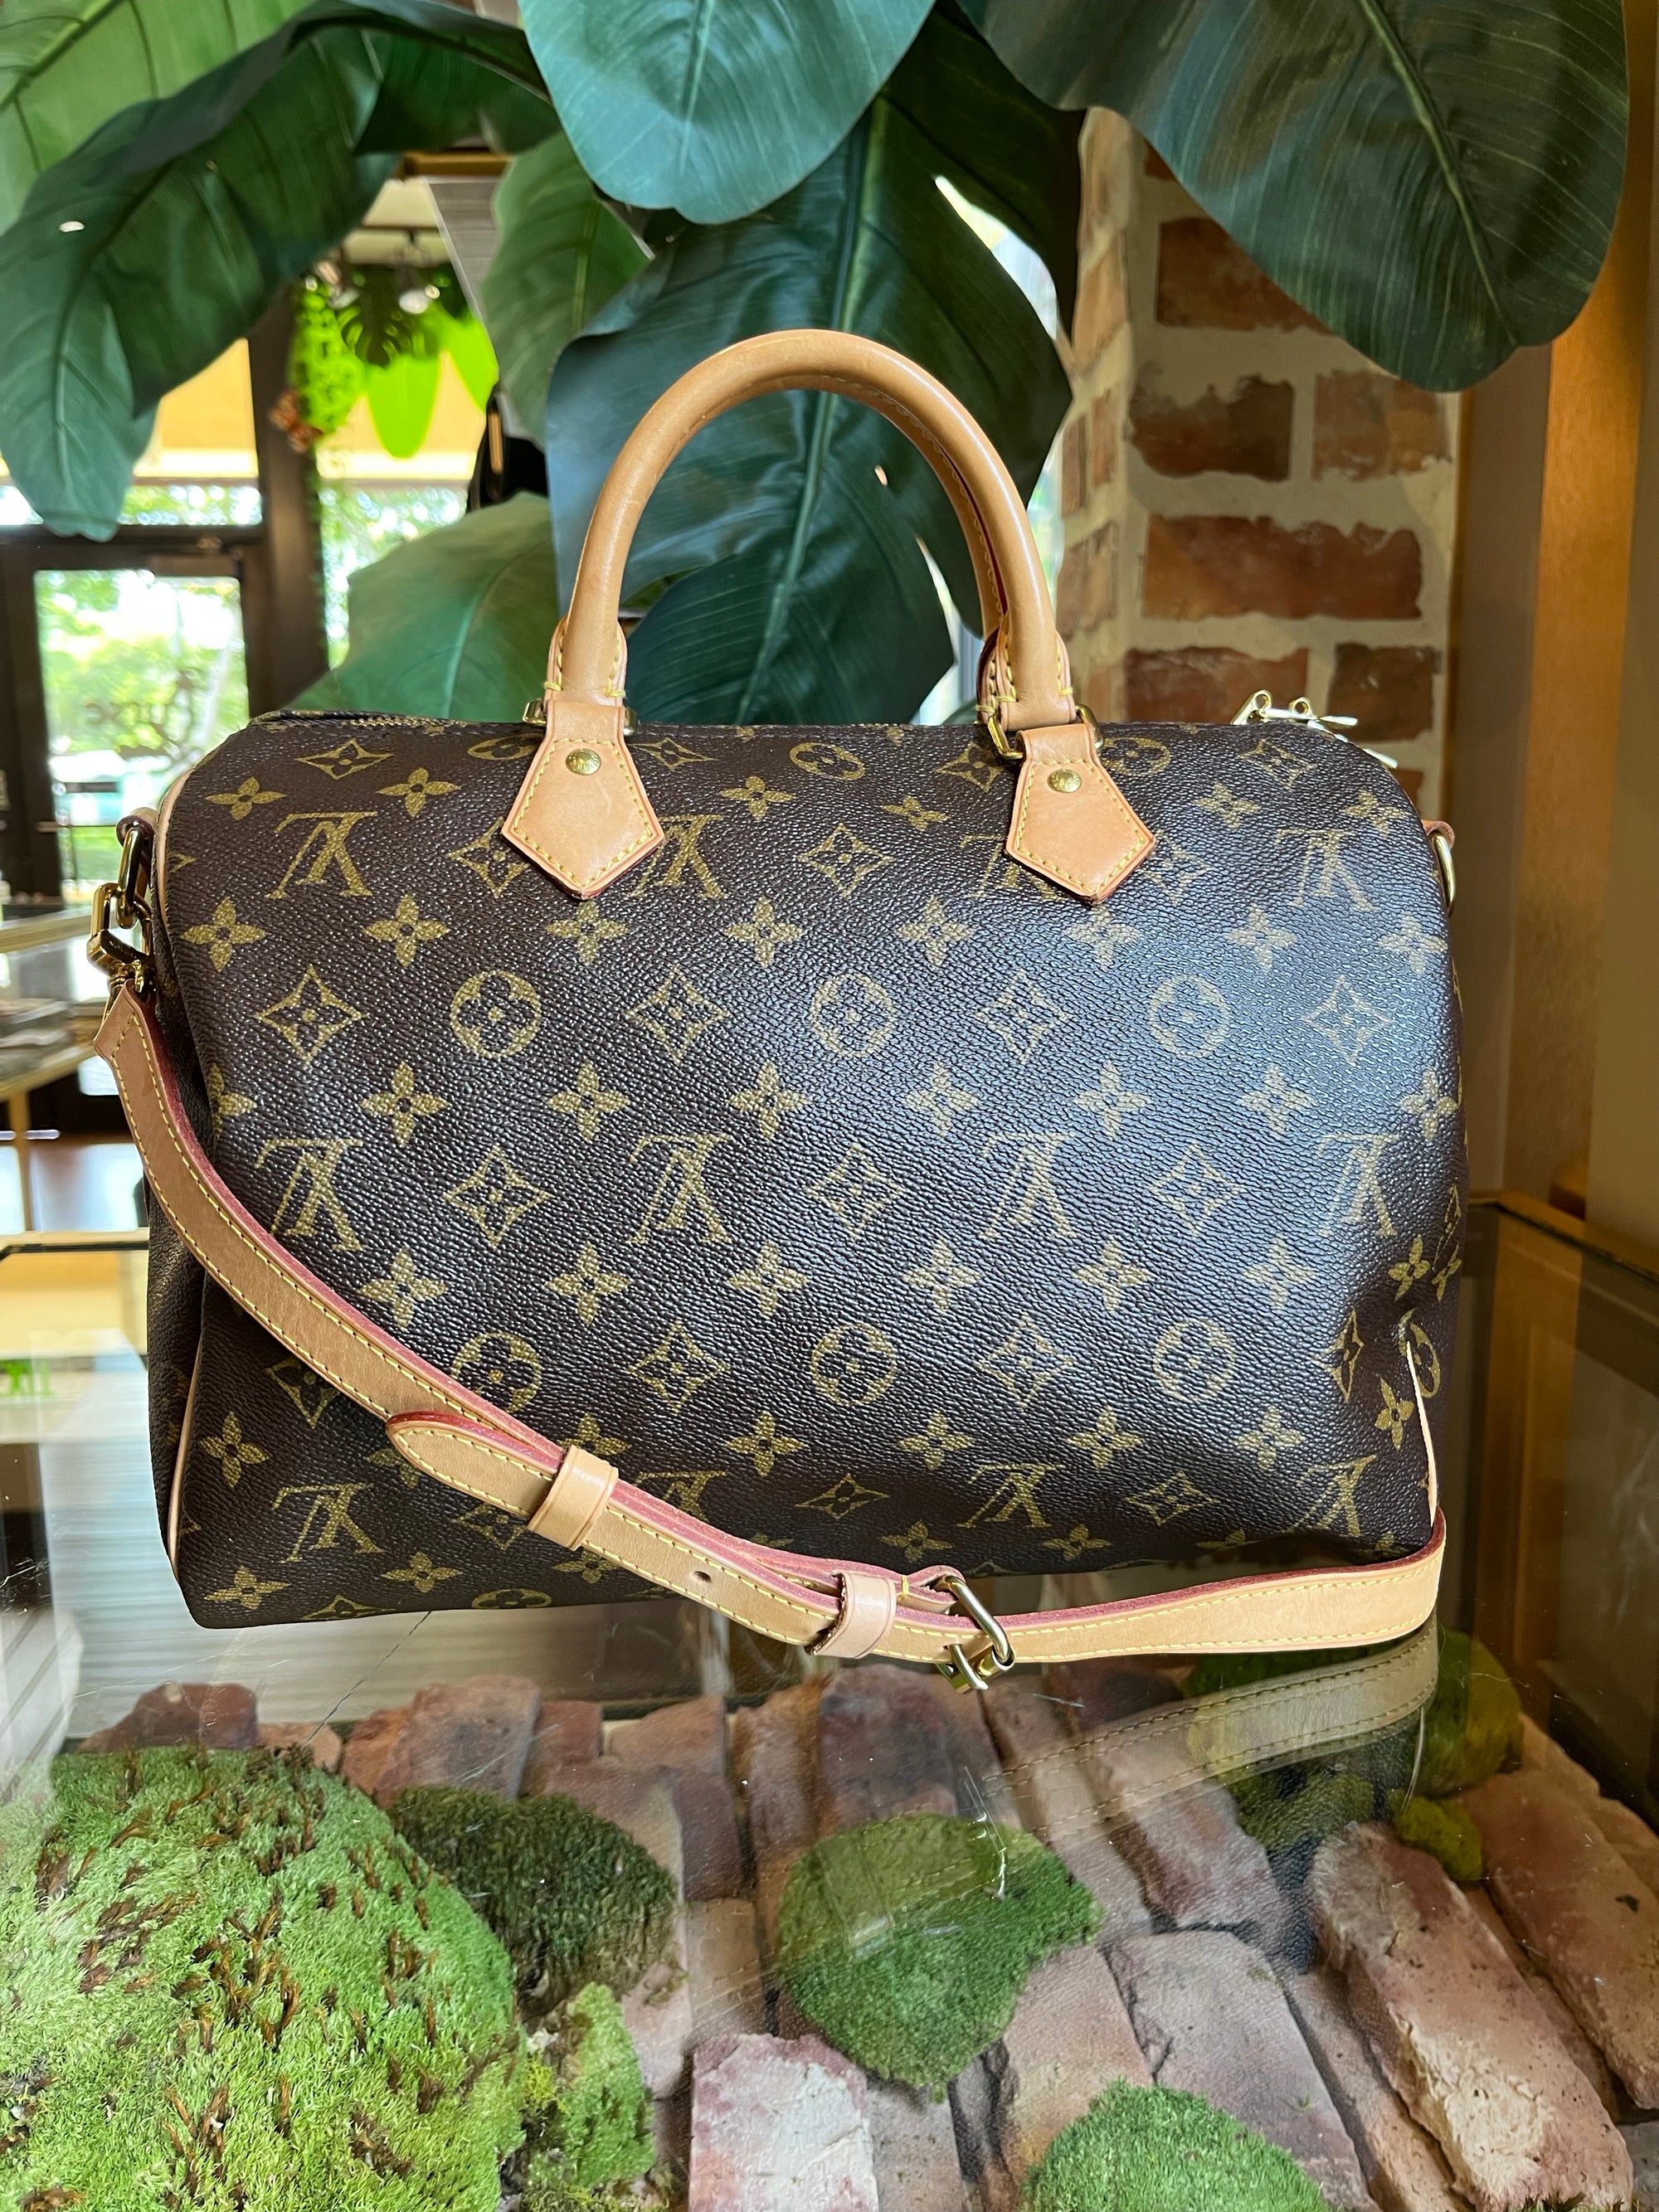 Louis Vuitton Speedy 30 Metallic Duffle Bag - Farfetch